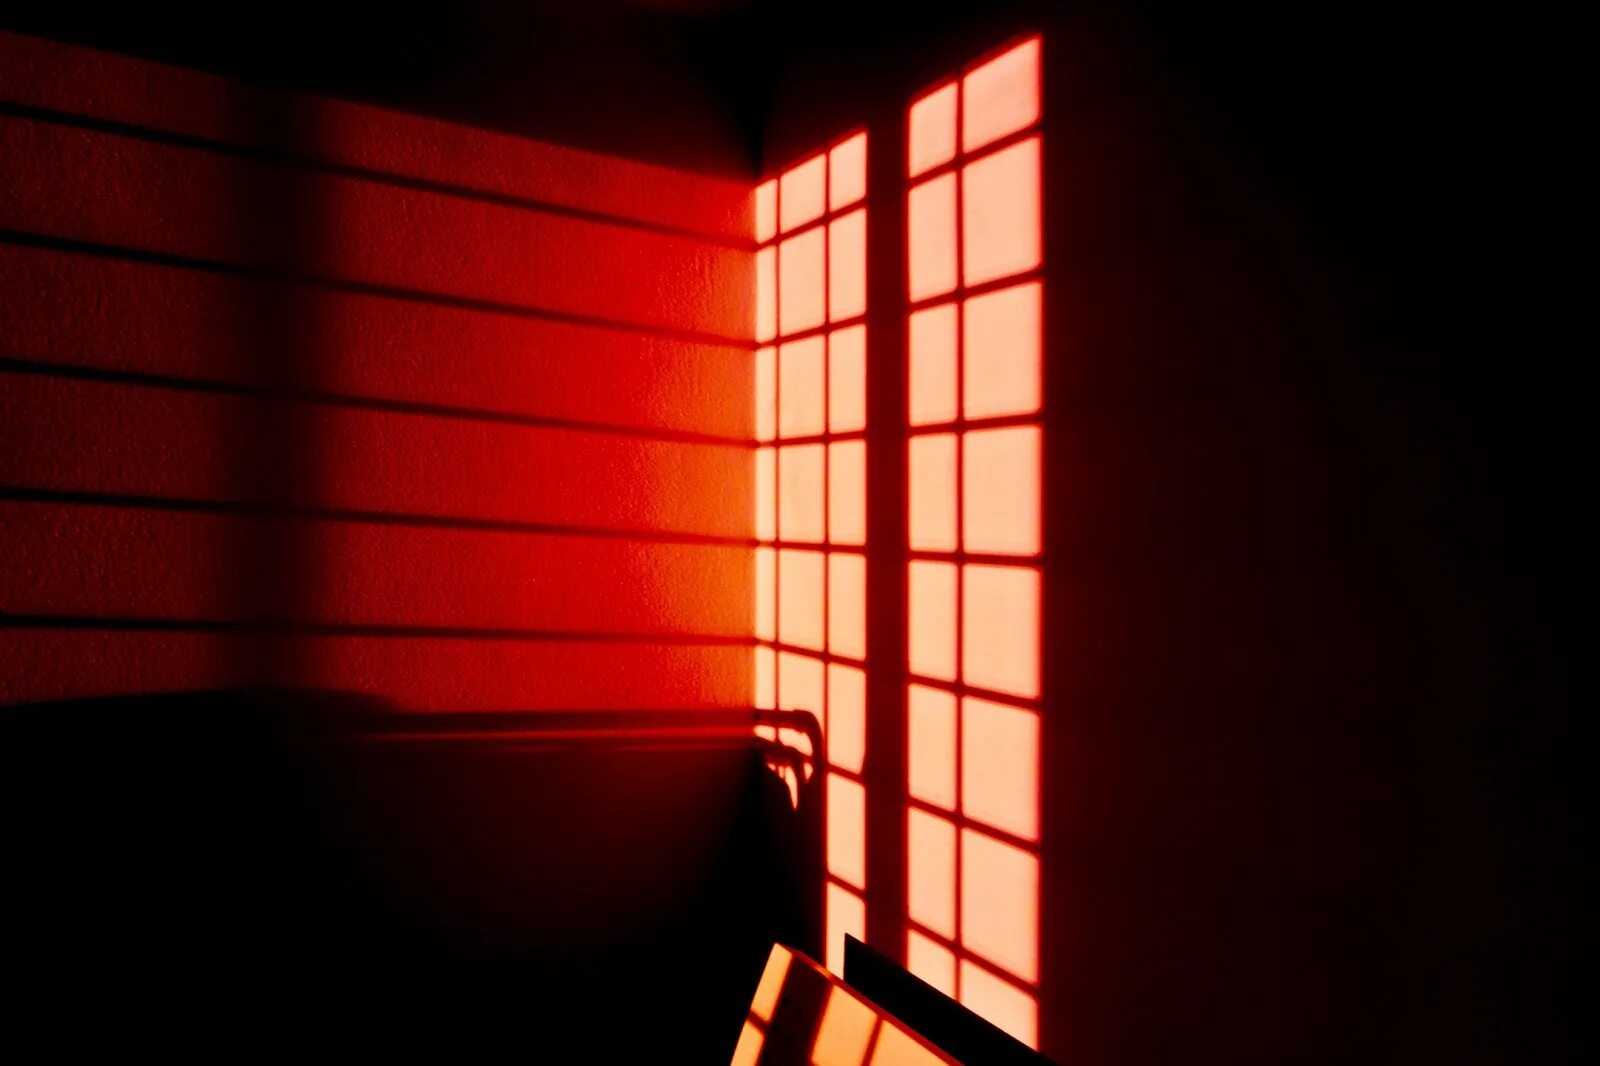 Shadows background. Red Room" красная комната  (1999) ужасы ". Красный свет в комнате. Свет из окна. Свет от жалюзи на стене.